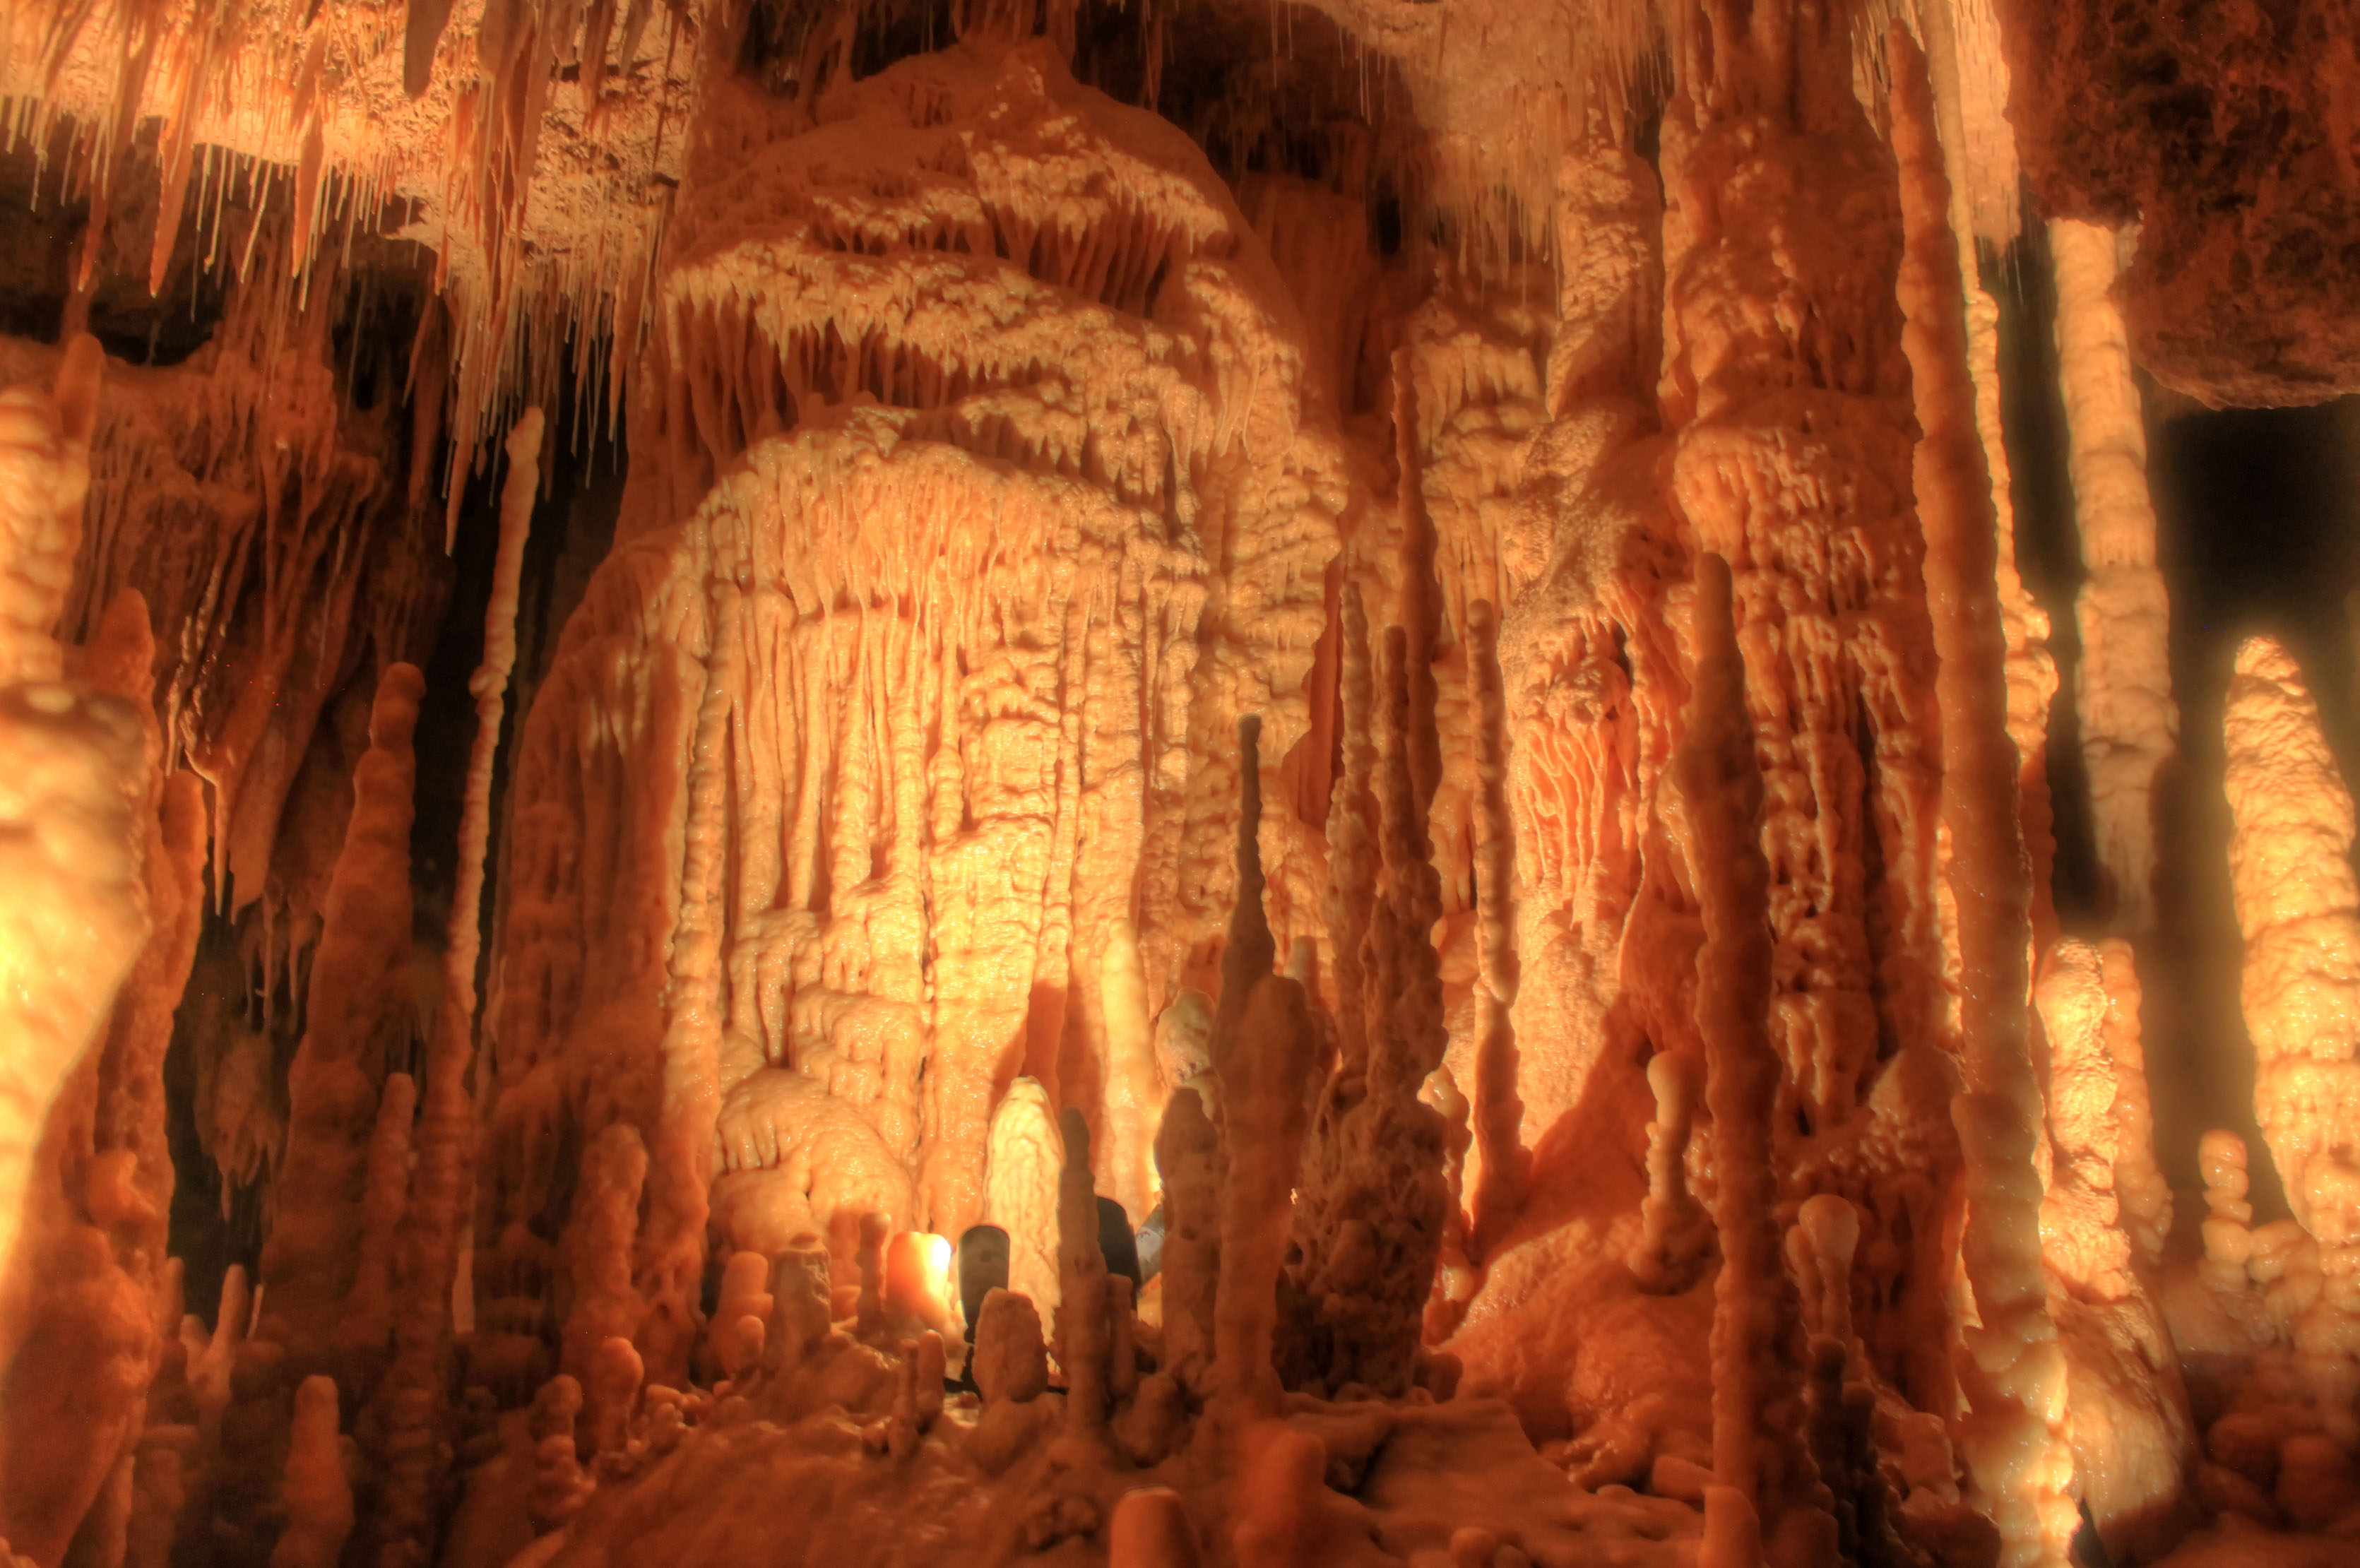 Gfp-texas-natural-bridge-caverns-large-room-in-cave.jpg